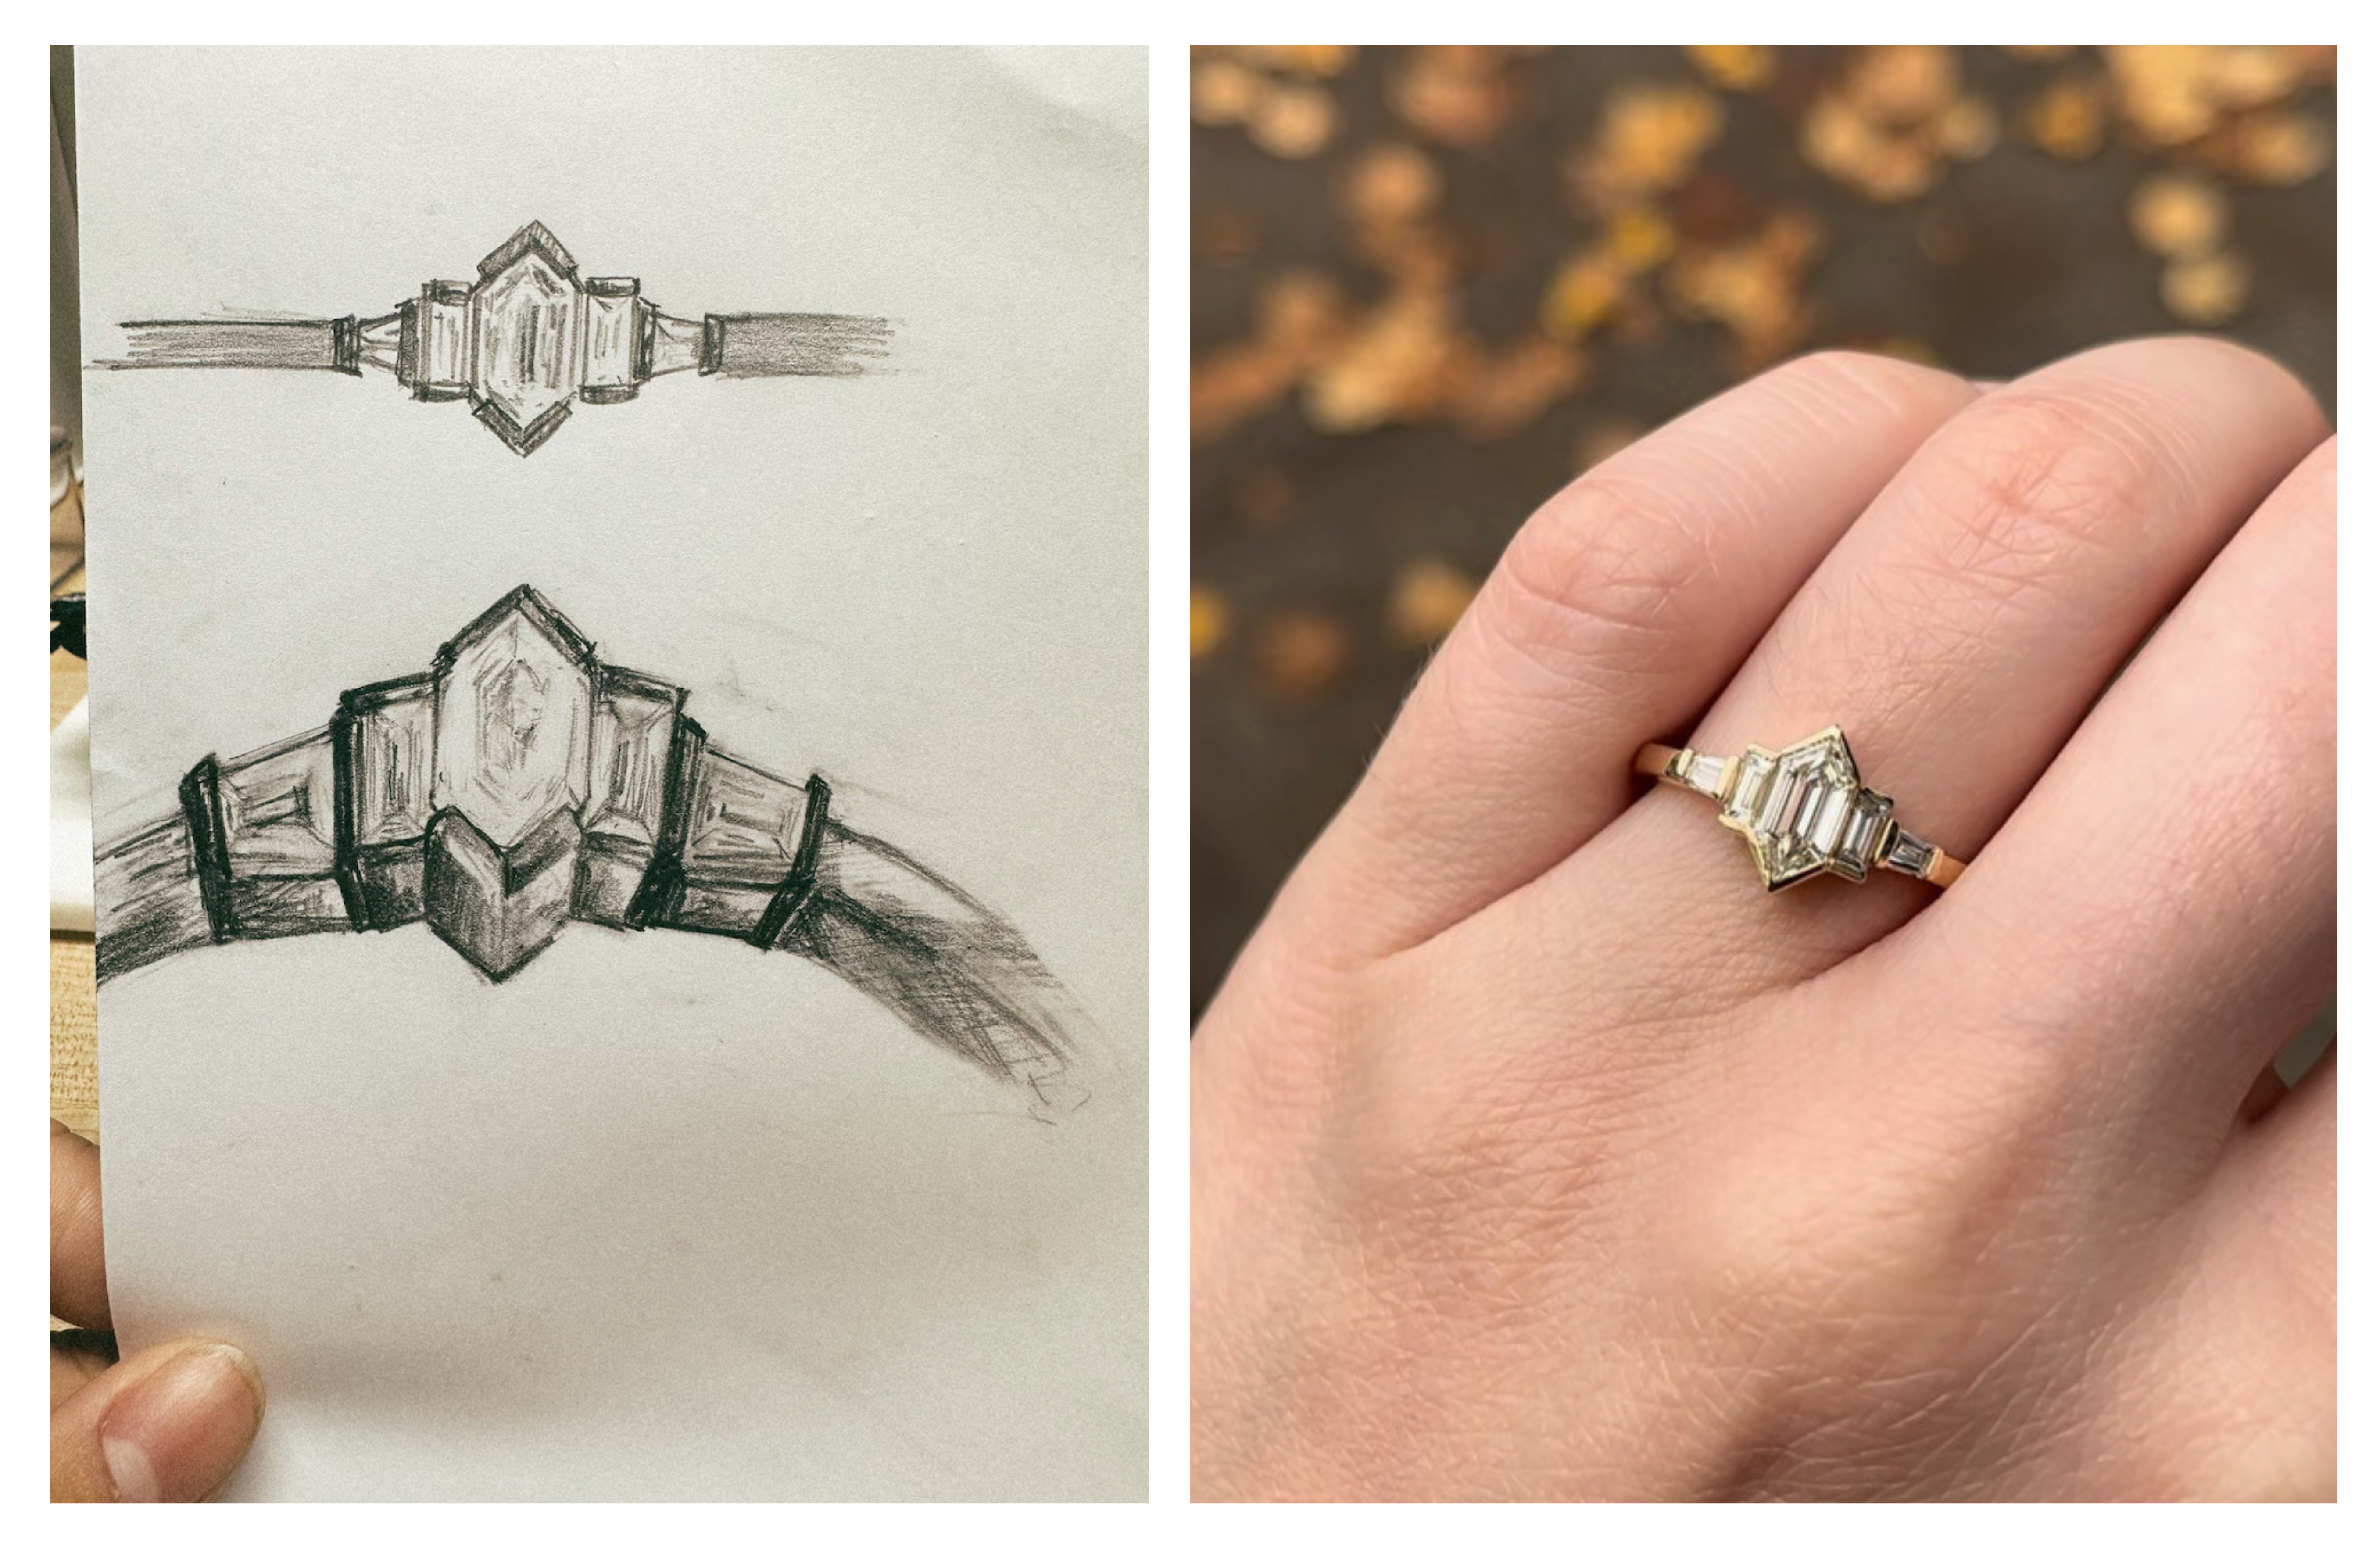 Engagement ring designs